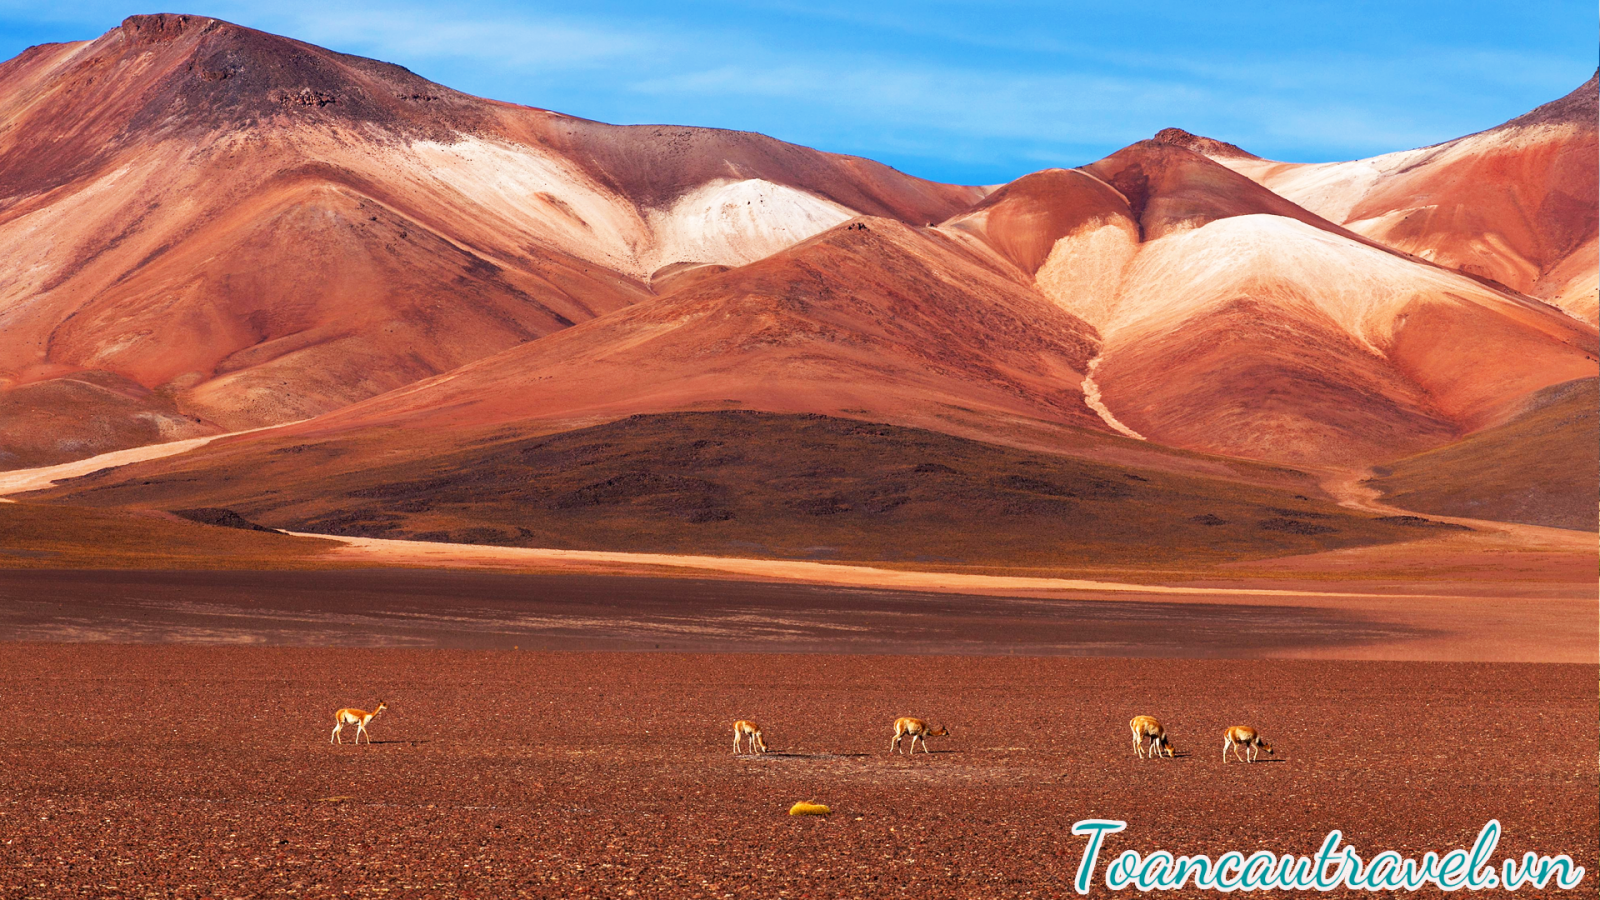 Altiplano 